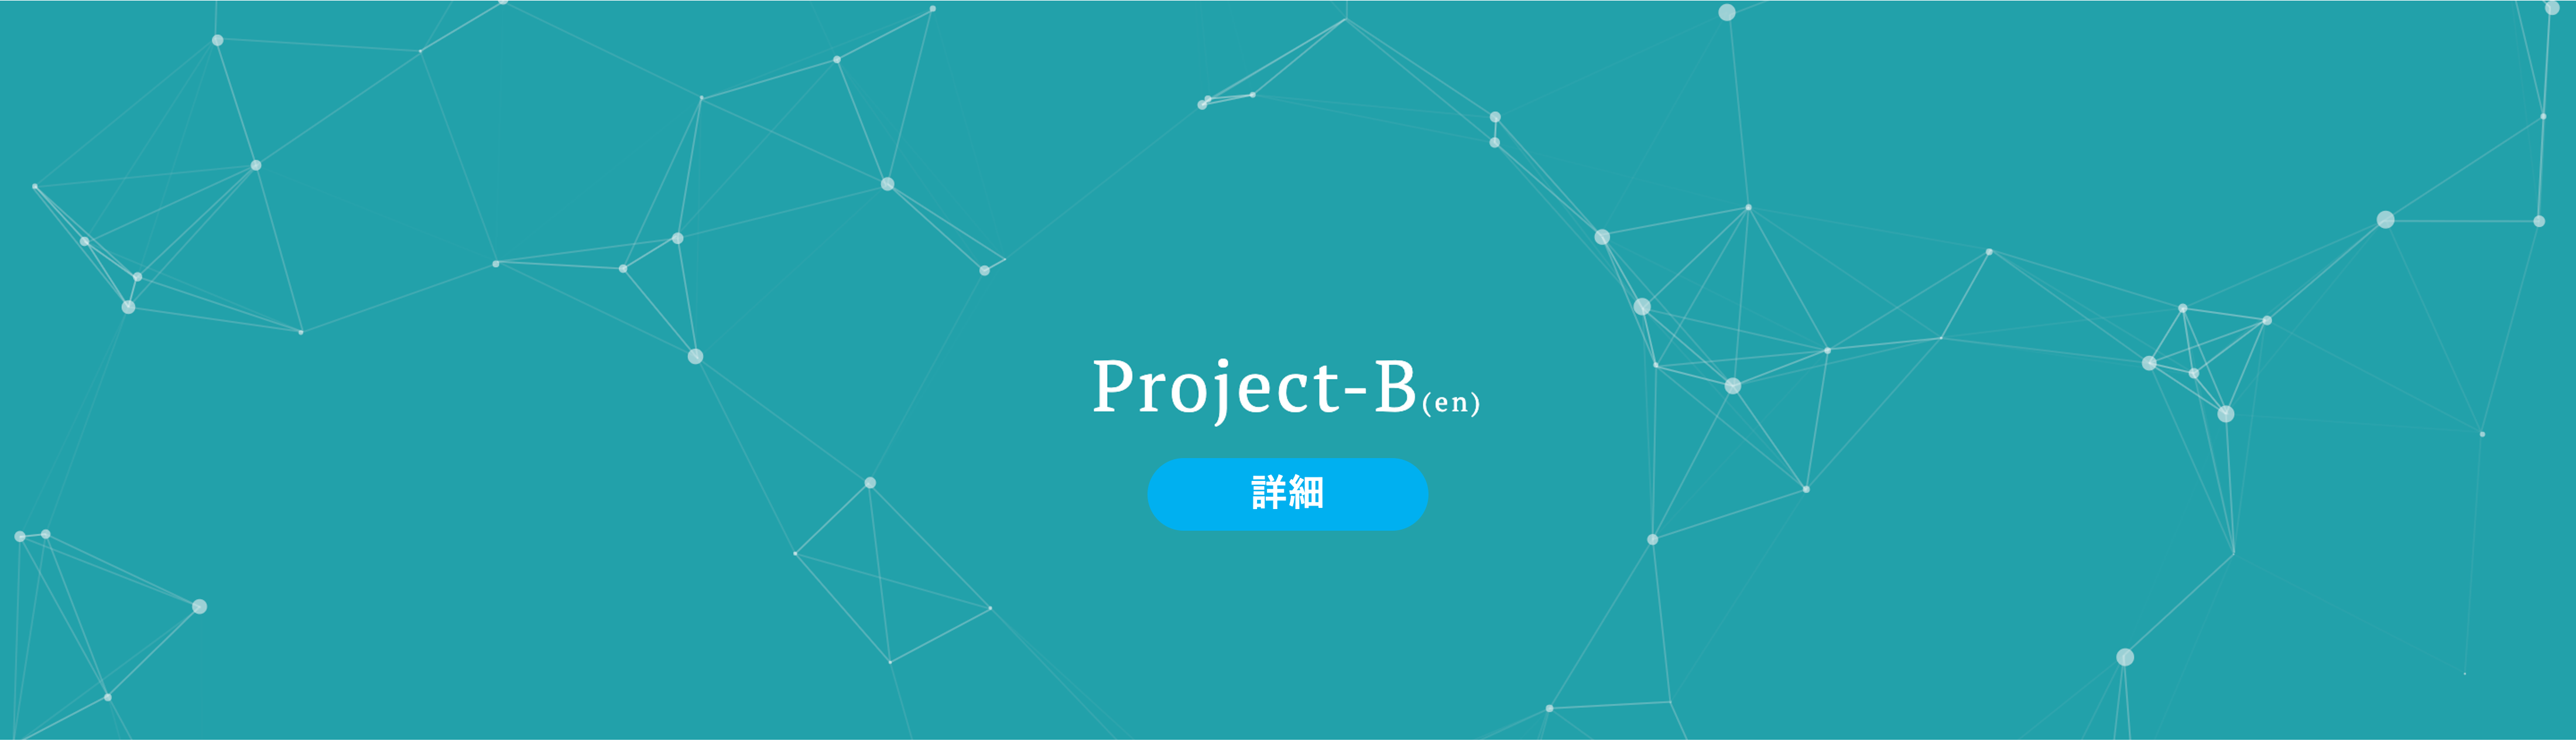 project-b